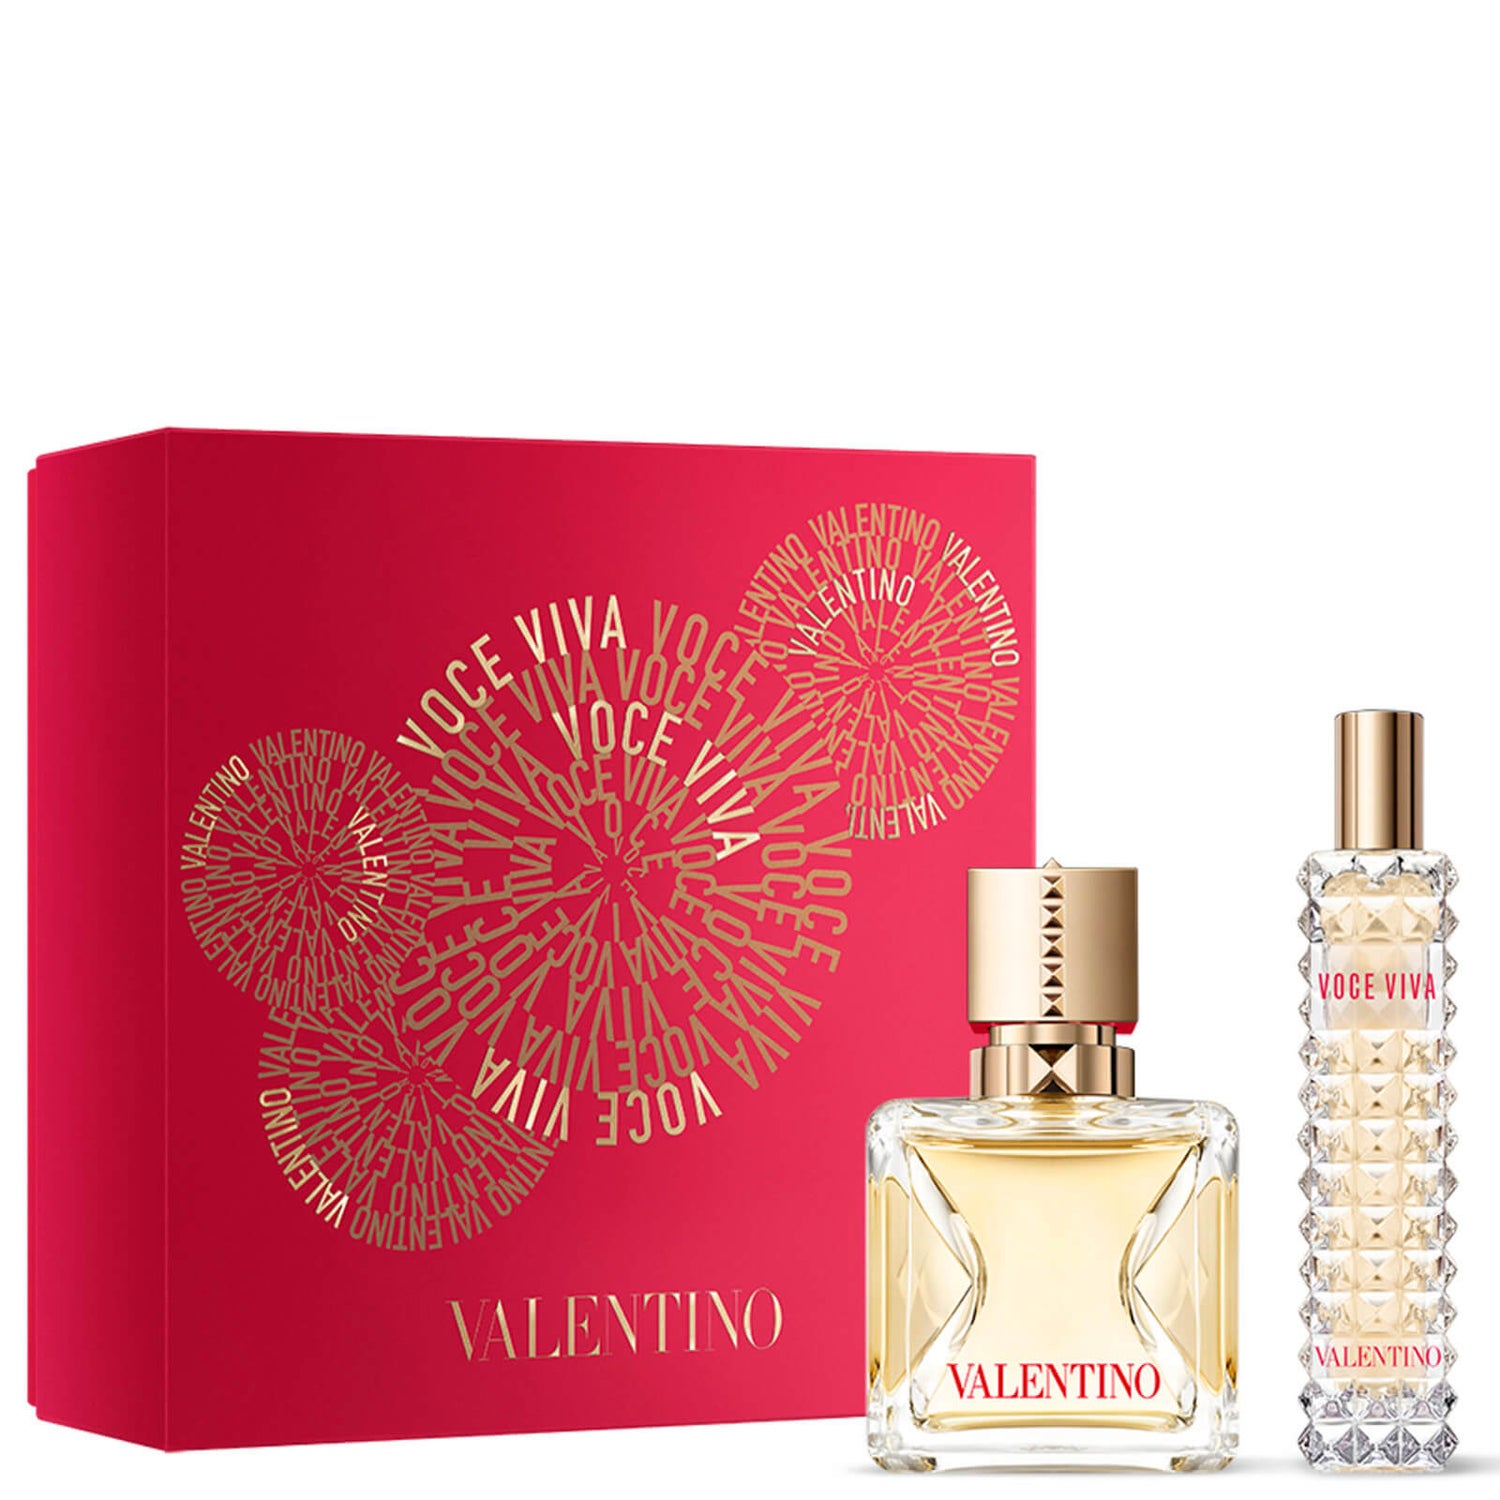 Valentino Voce Viva Eau de Parfum Gift Set 50ml